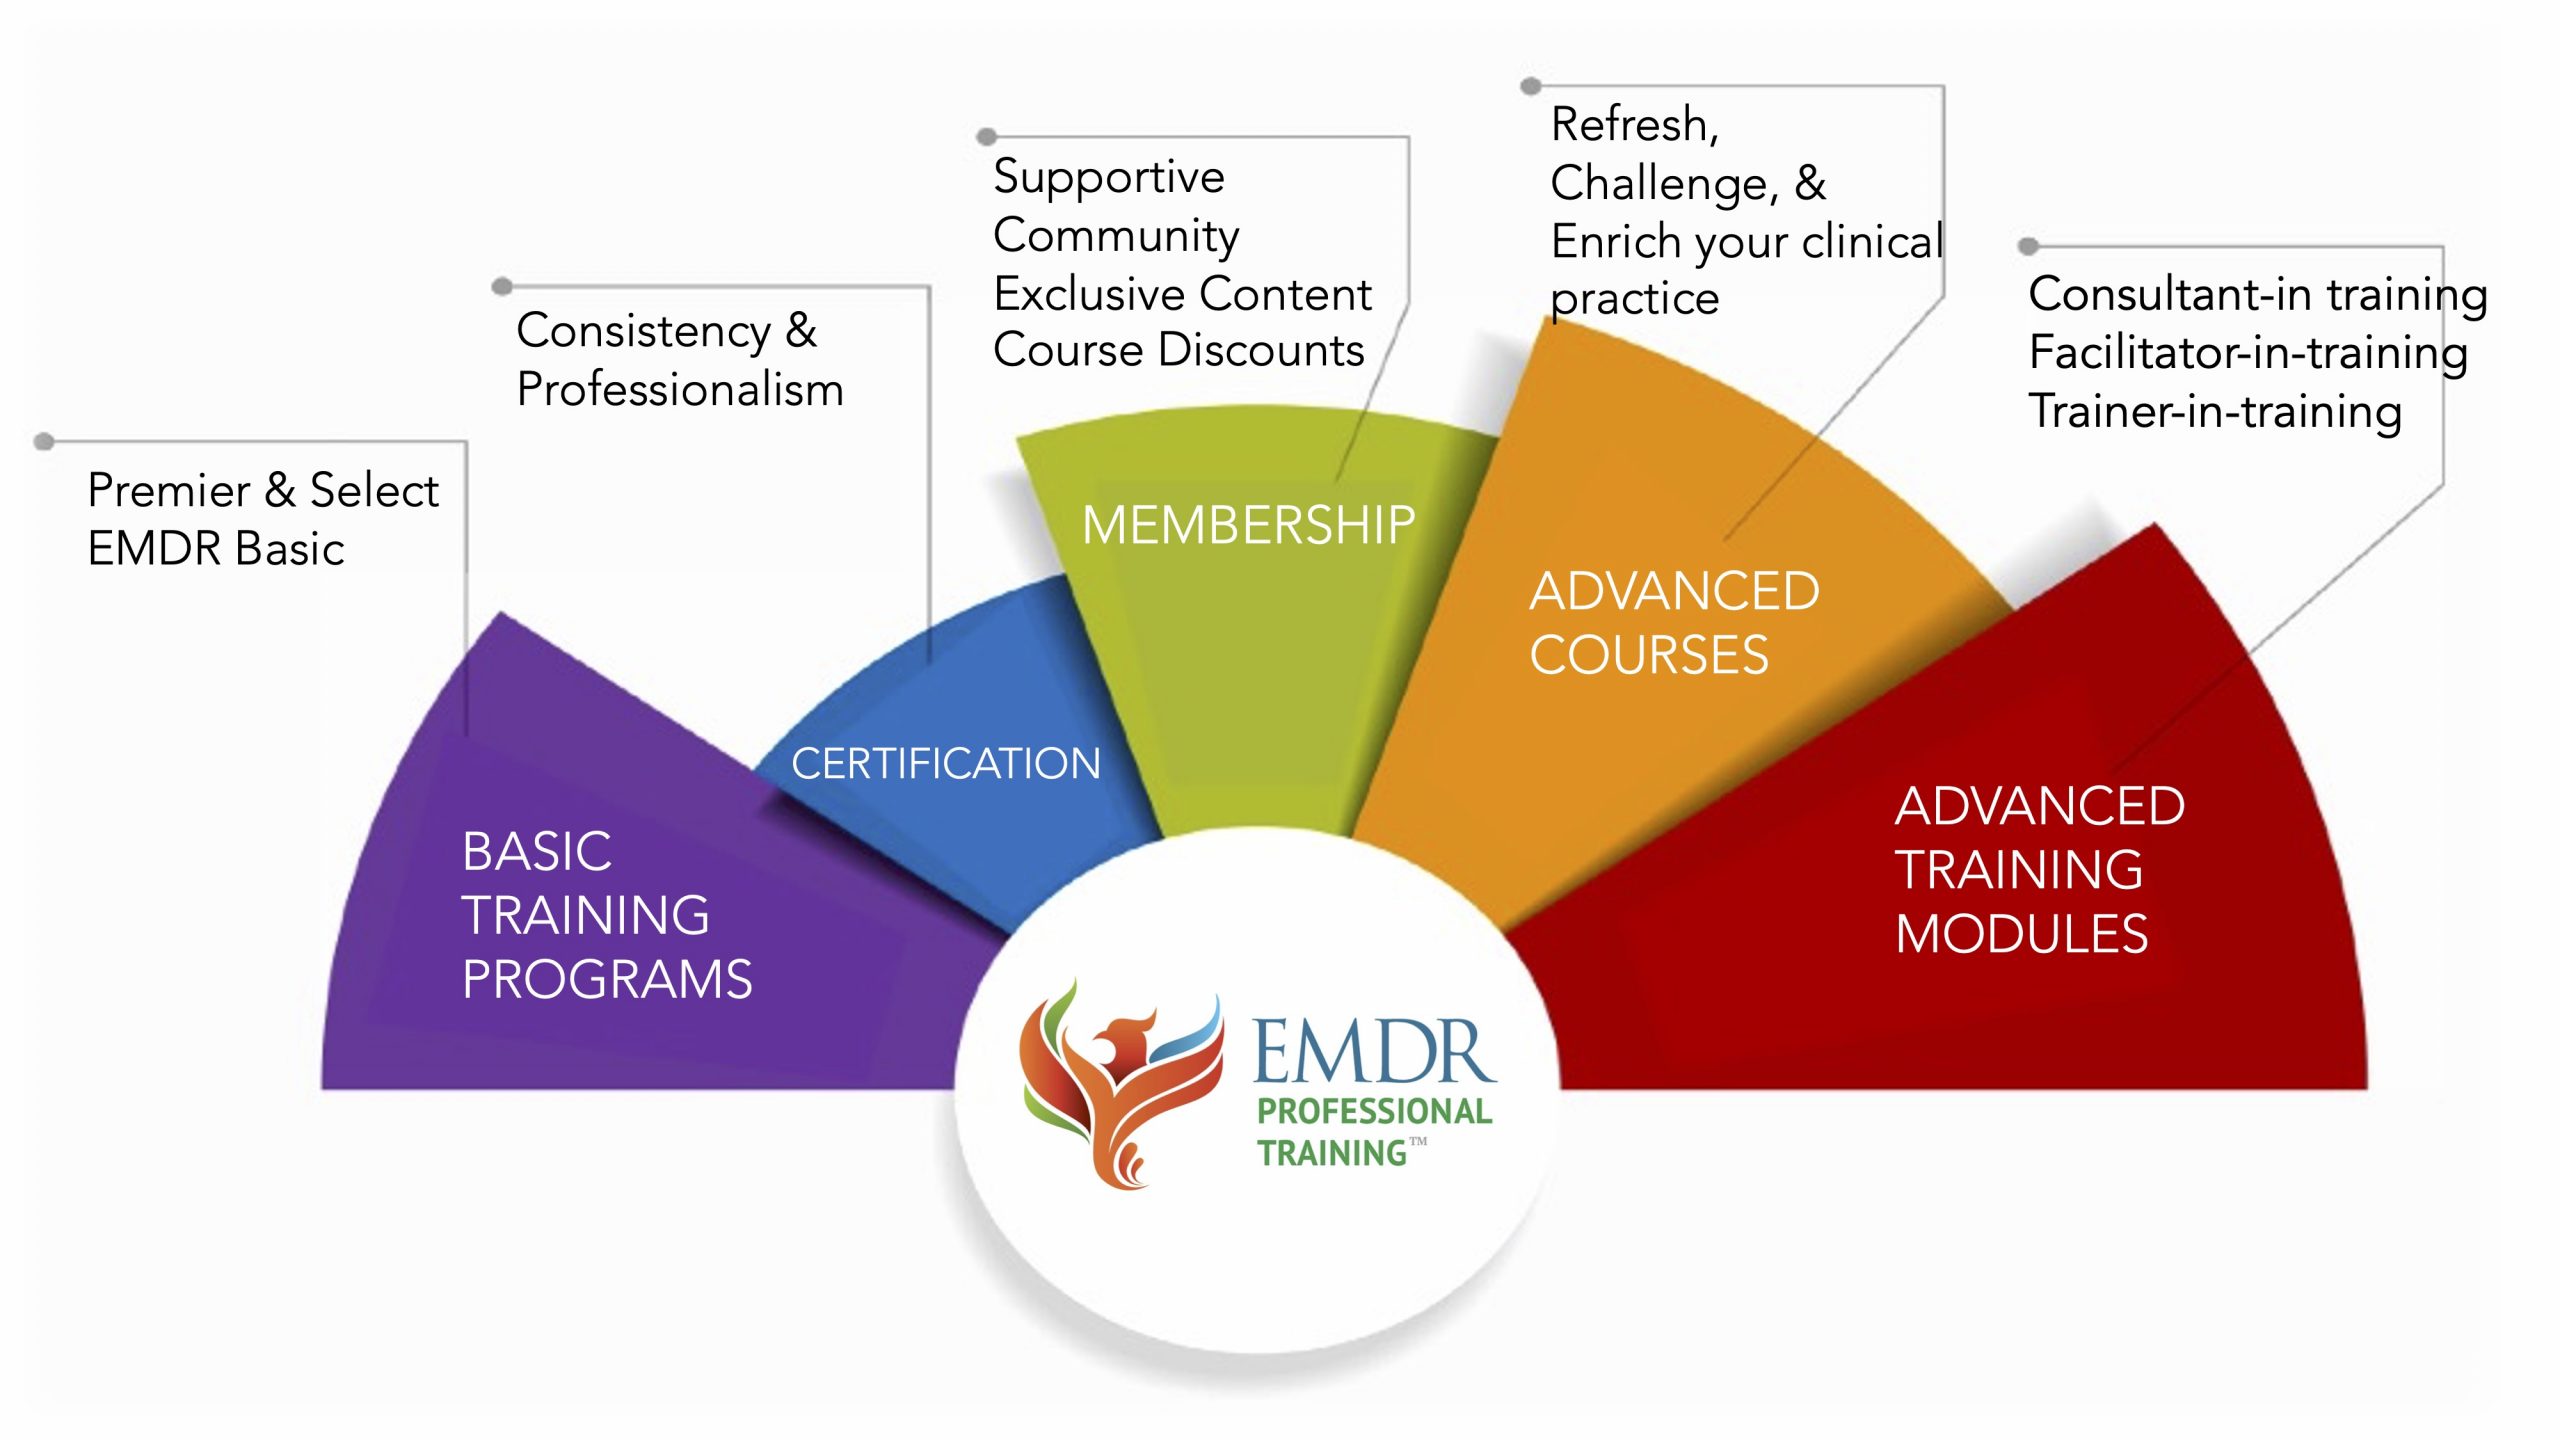 EMDR Professional Training:  EMDR training at all levels